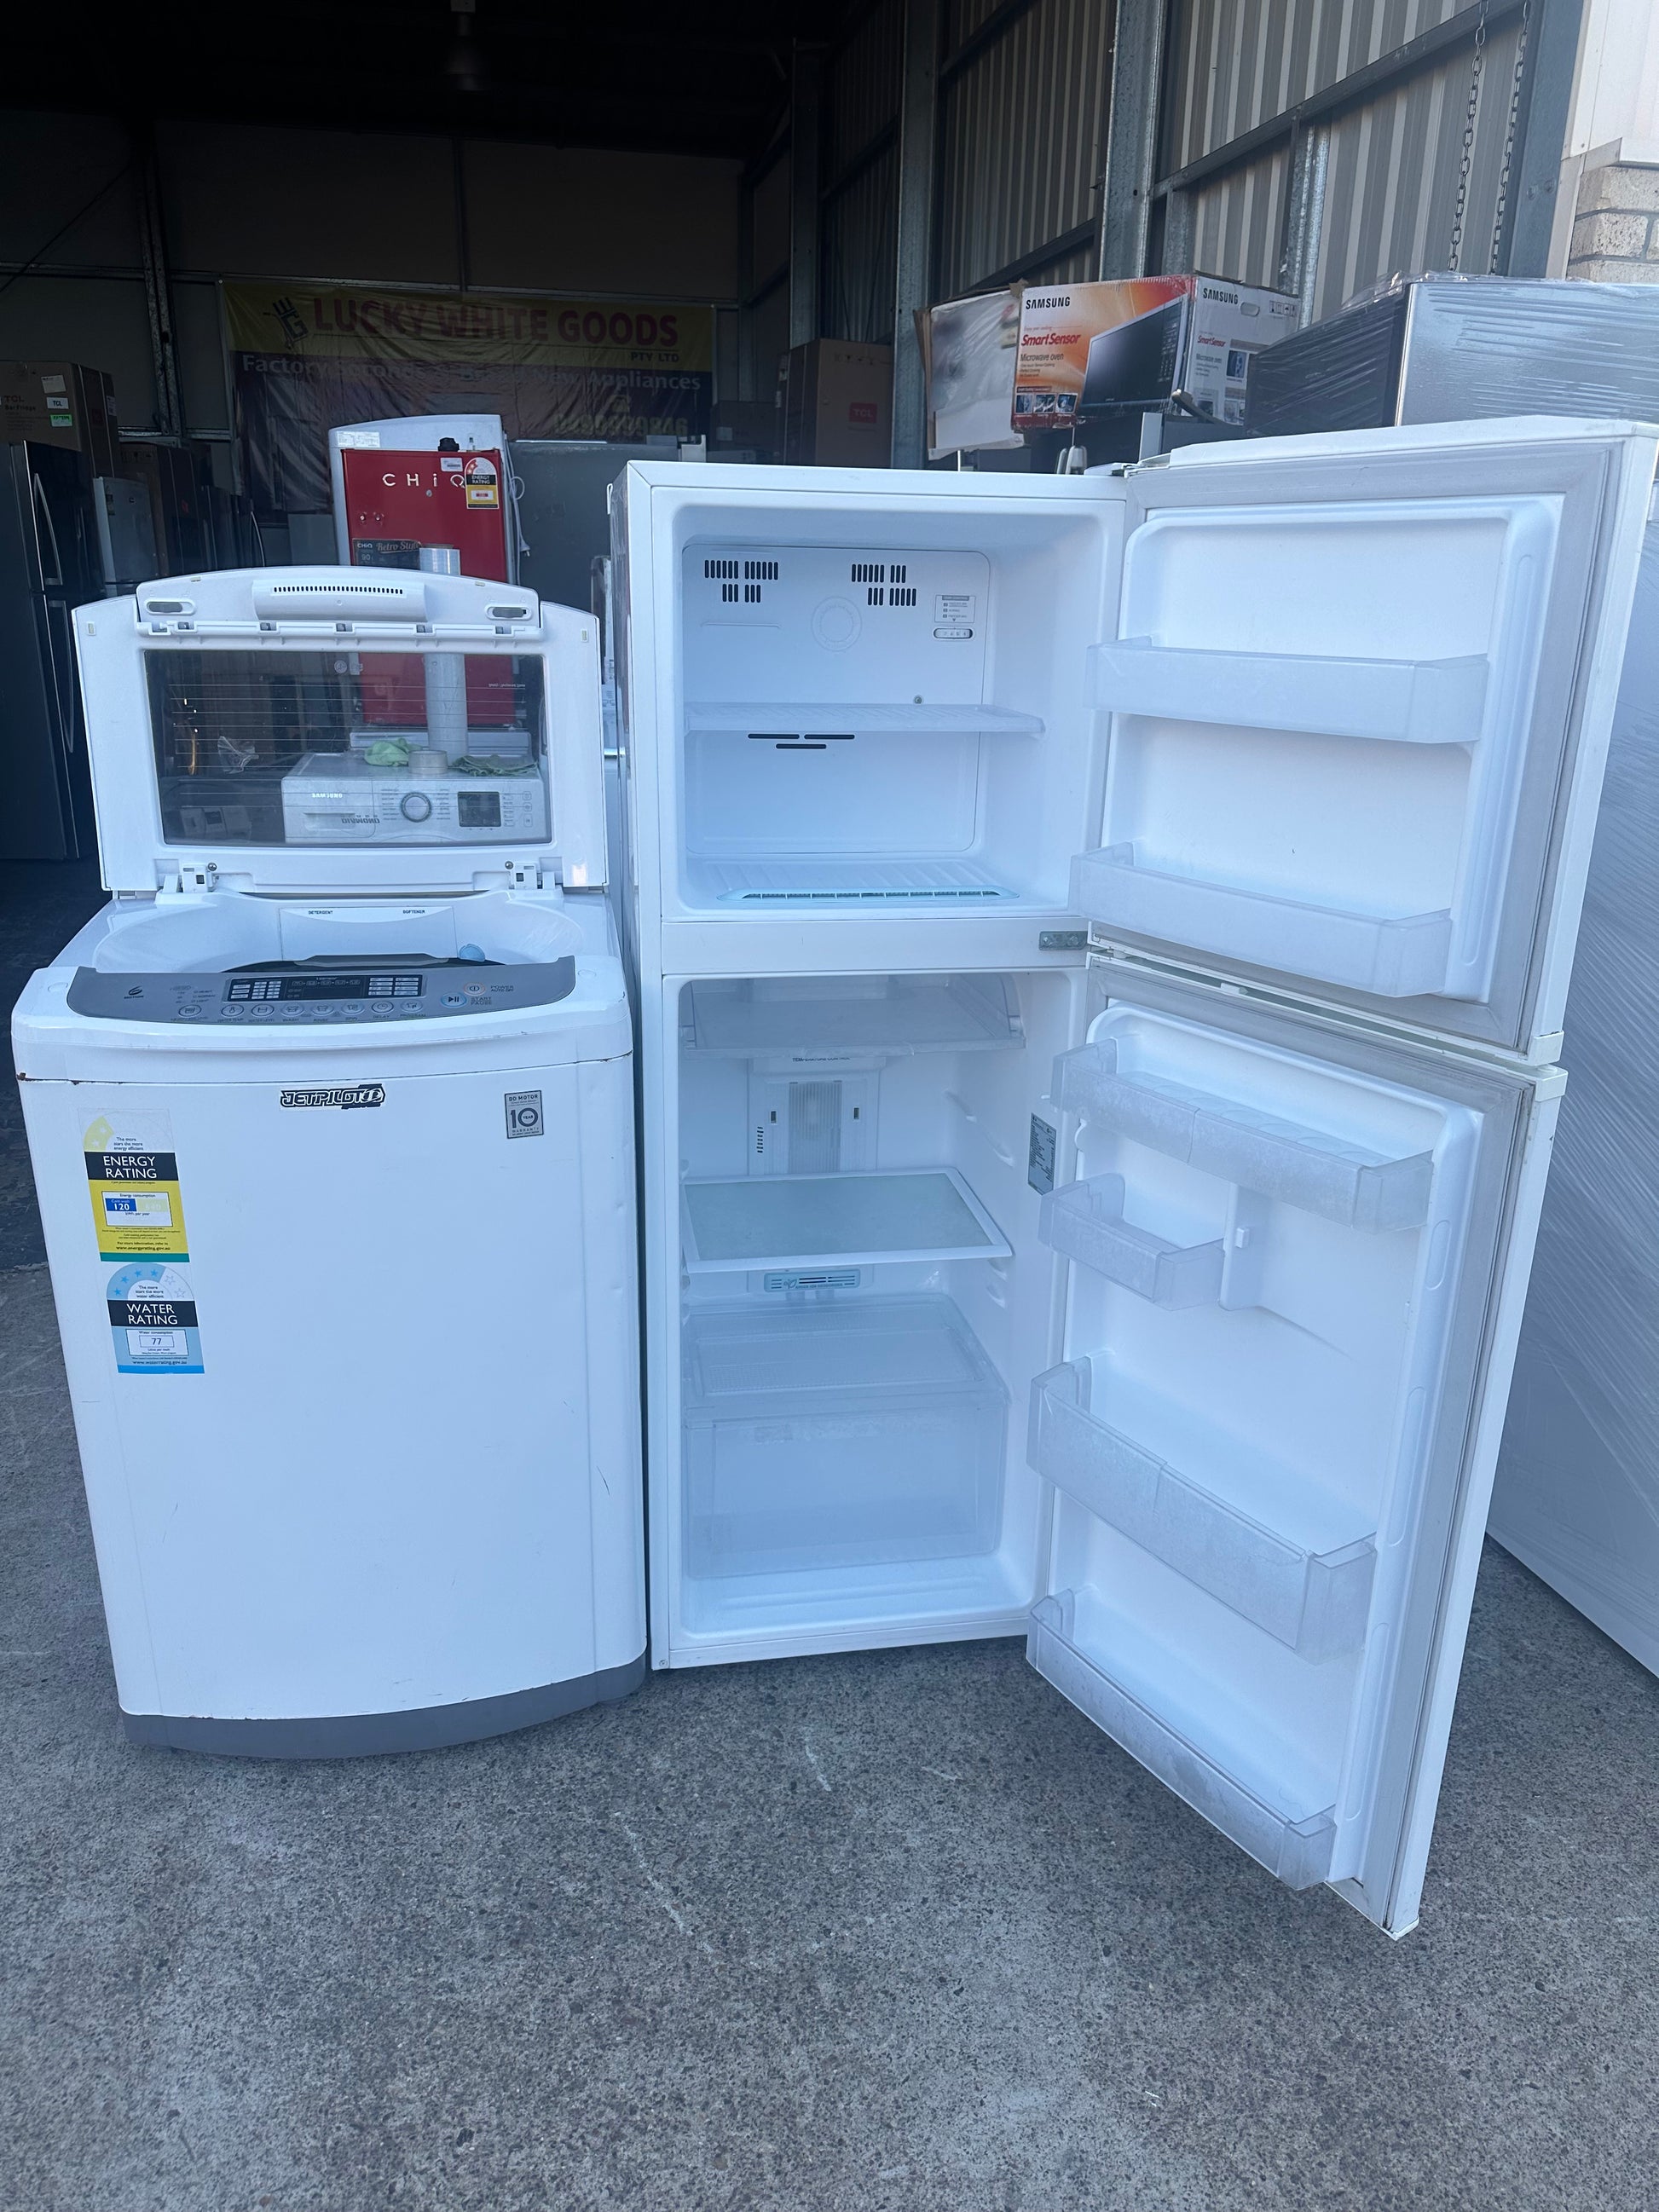 LG 205 litres Fridge Freezer & LG 7.5 kgs washer | BRISBANE